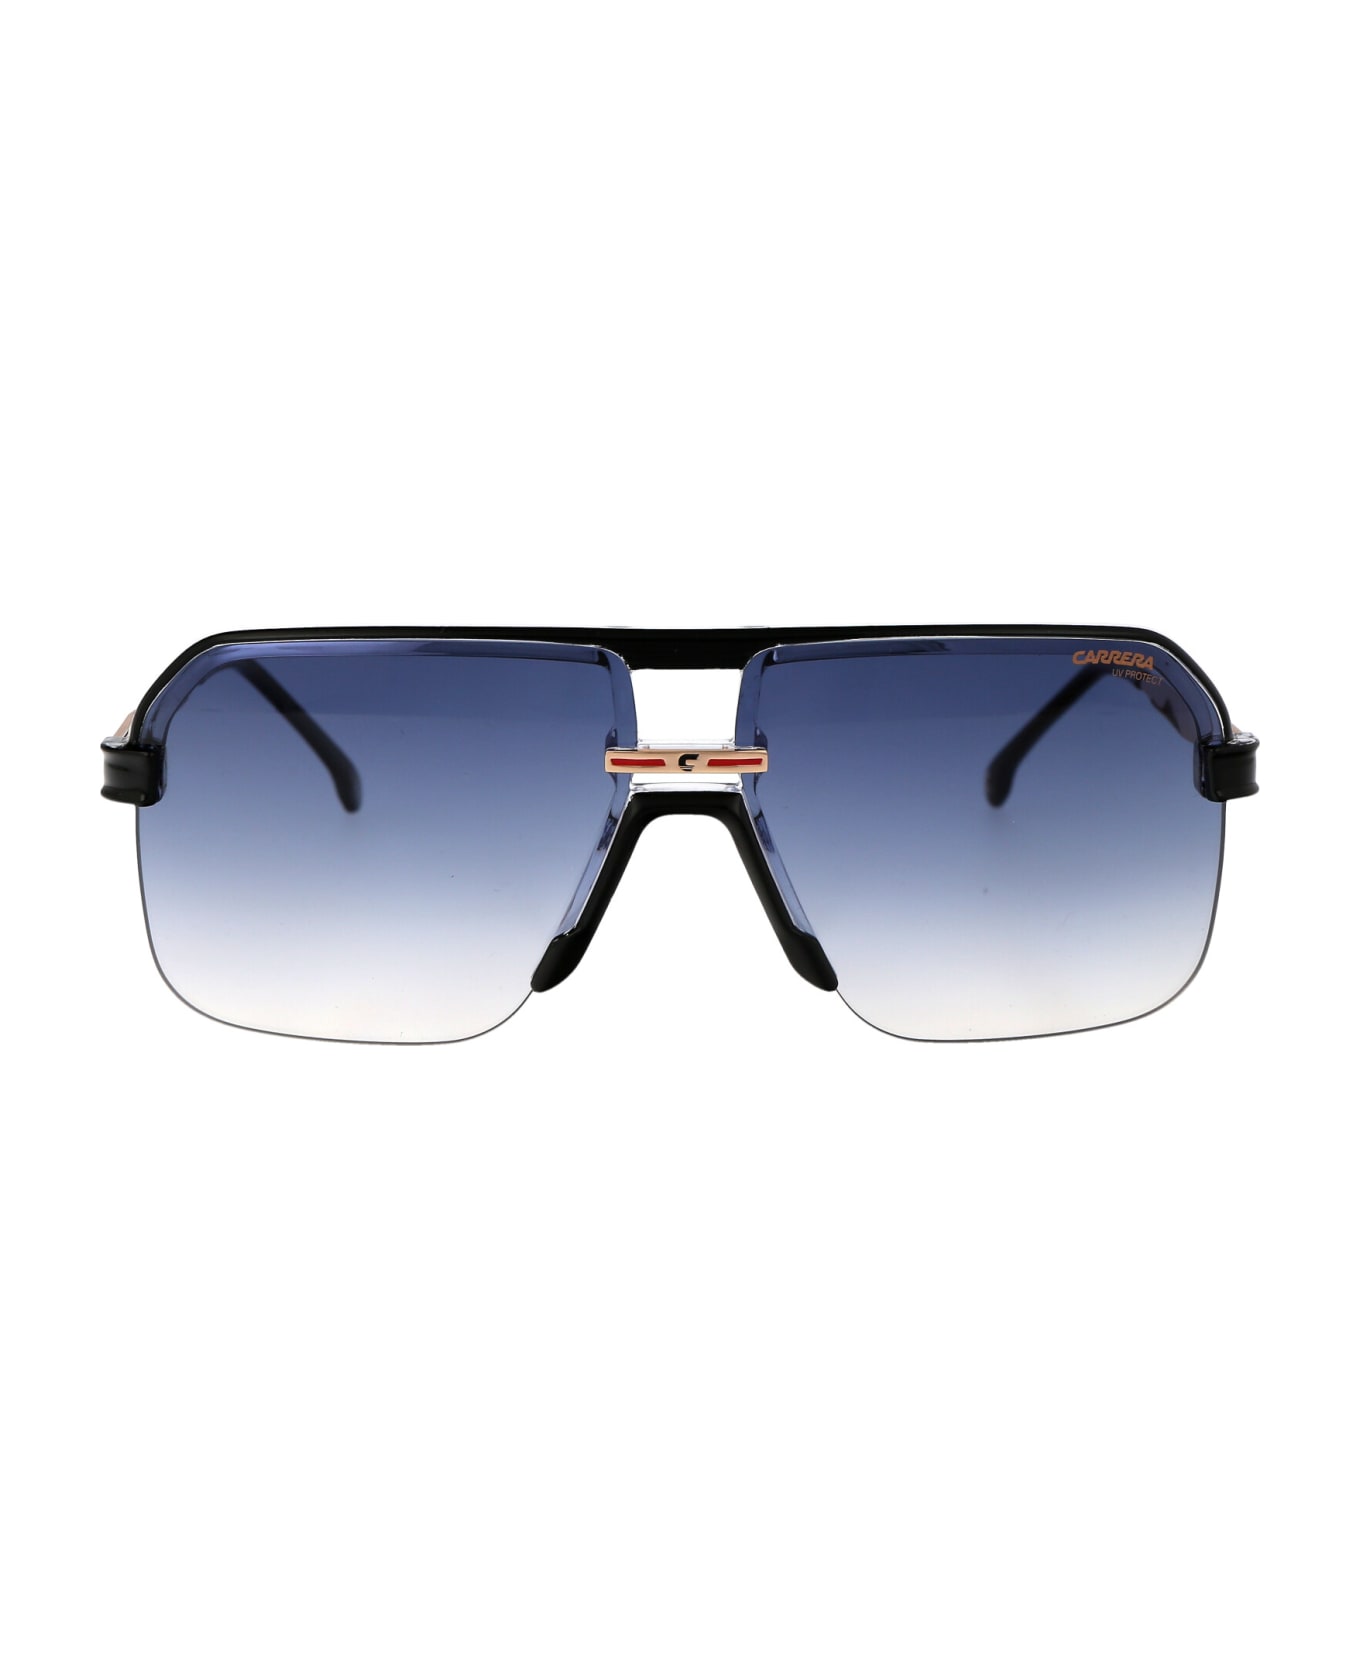 Carrera 1066/s Sunglasses - 7C508 BLACK CRY